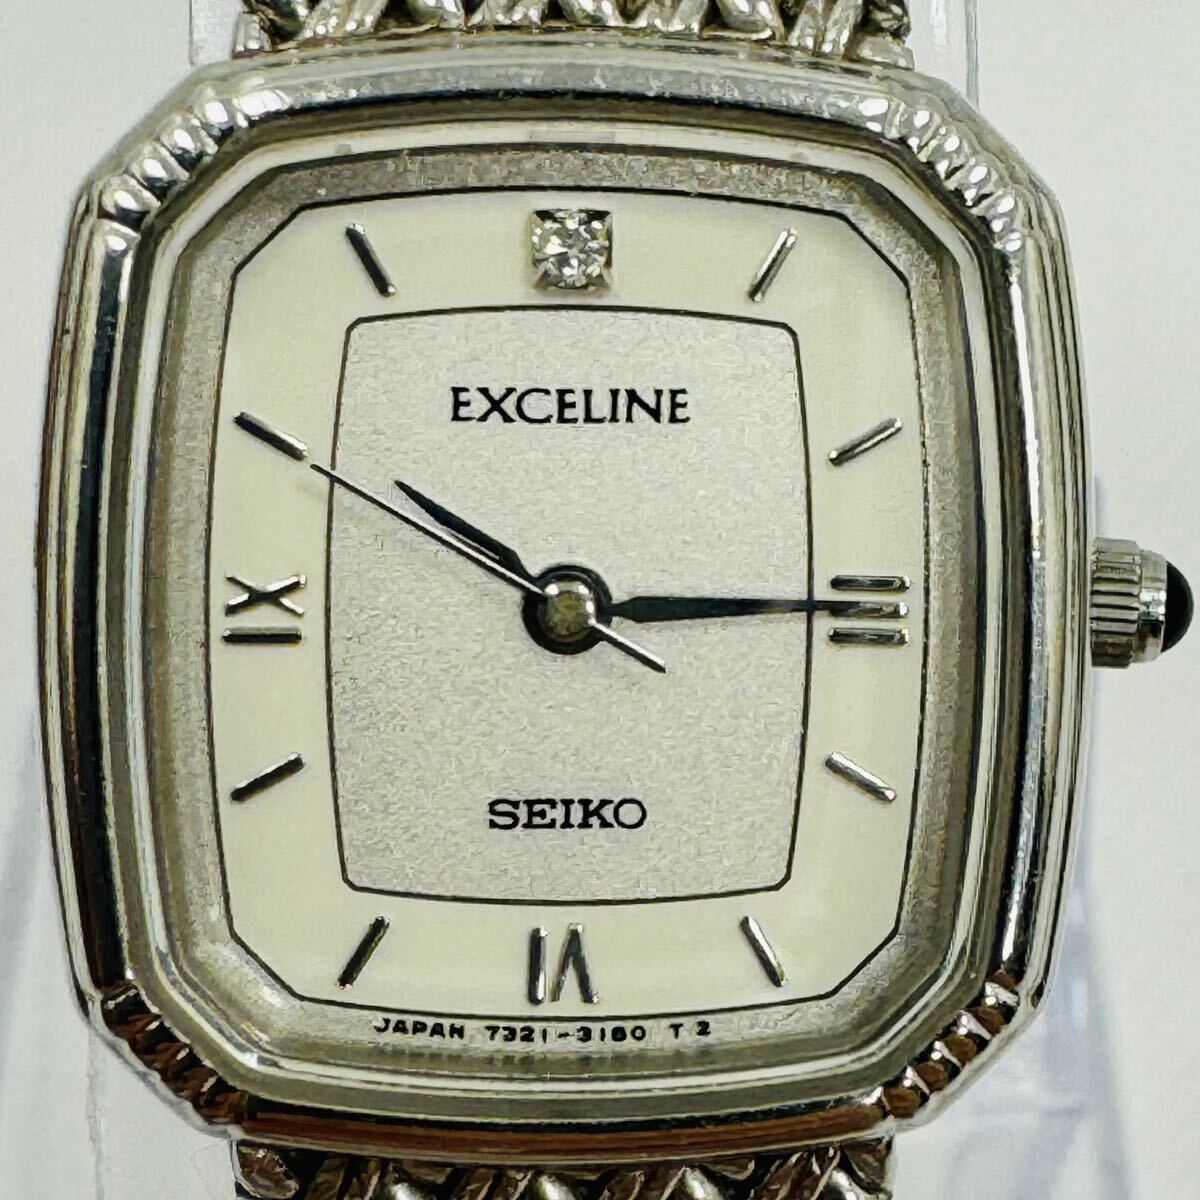 3636 * 1 иен старт * SEIKO Seiko Exceline Exceline 7321-6600 серебряный камень есть наручные часы женский часы батарейка заменен 